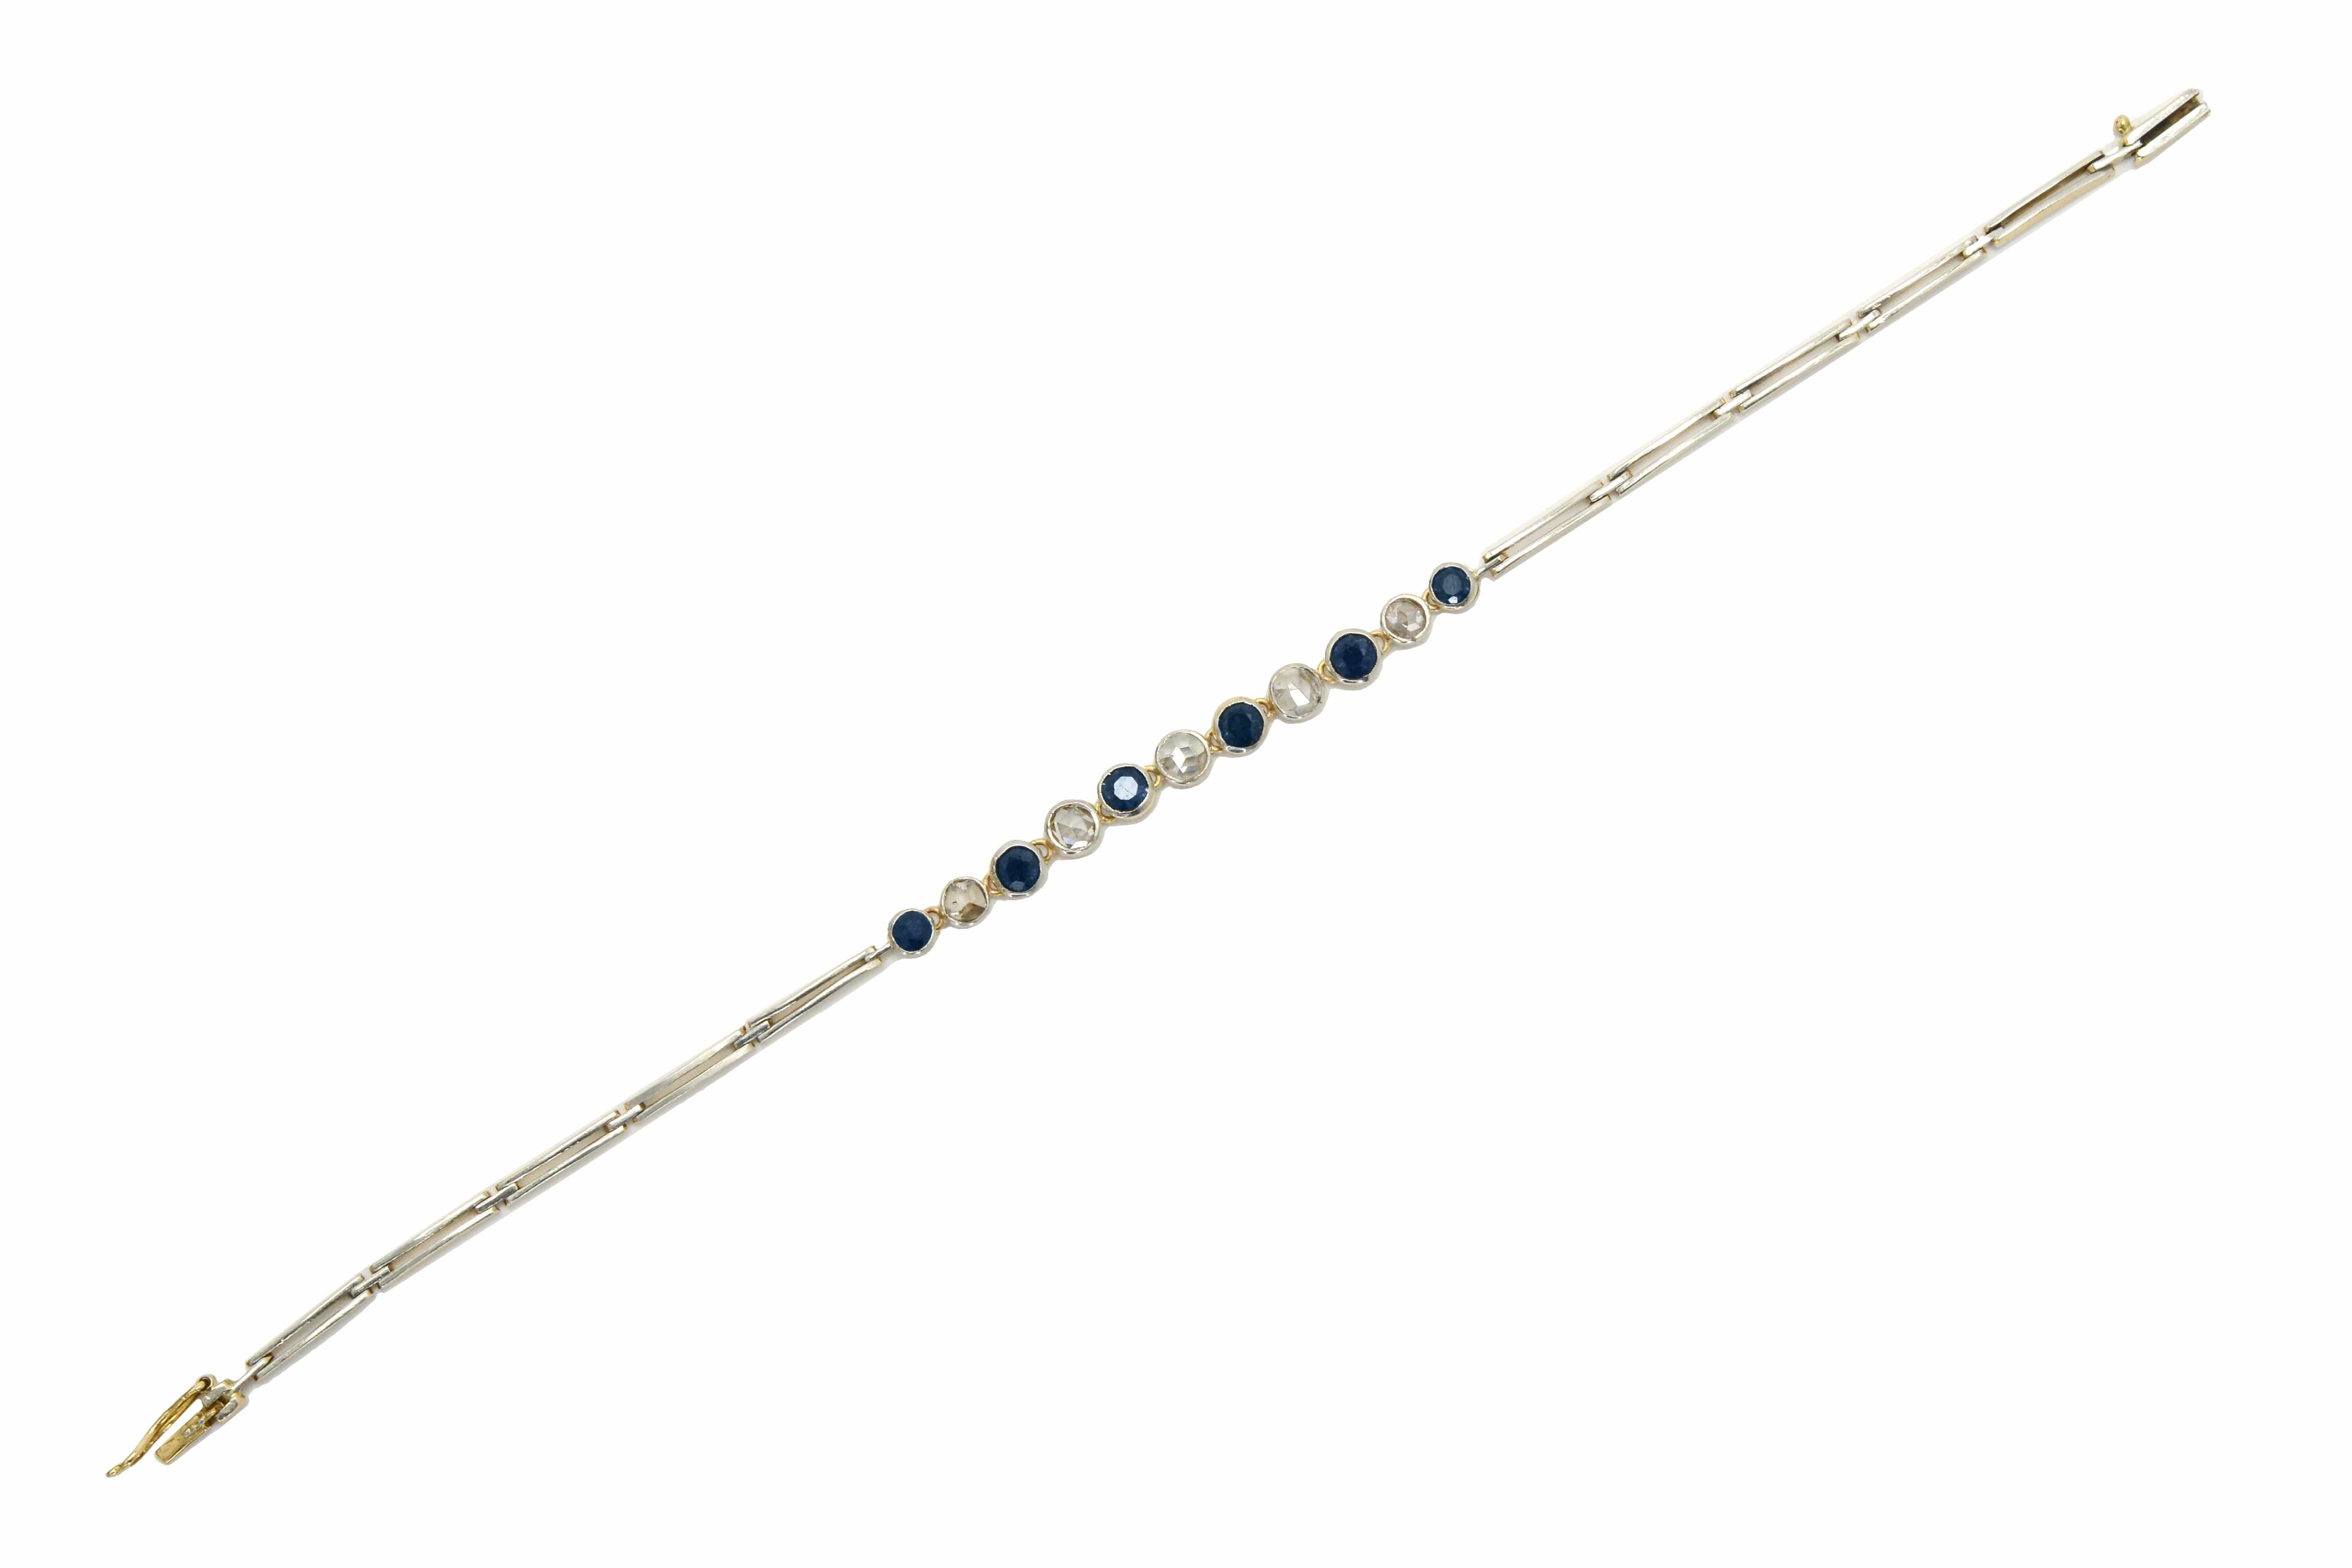 A 2 tone antique link bracelet with blue sapphires and diamonds.